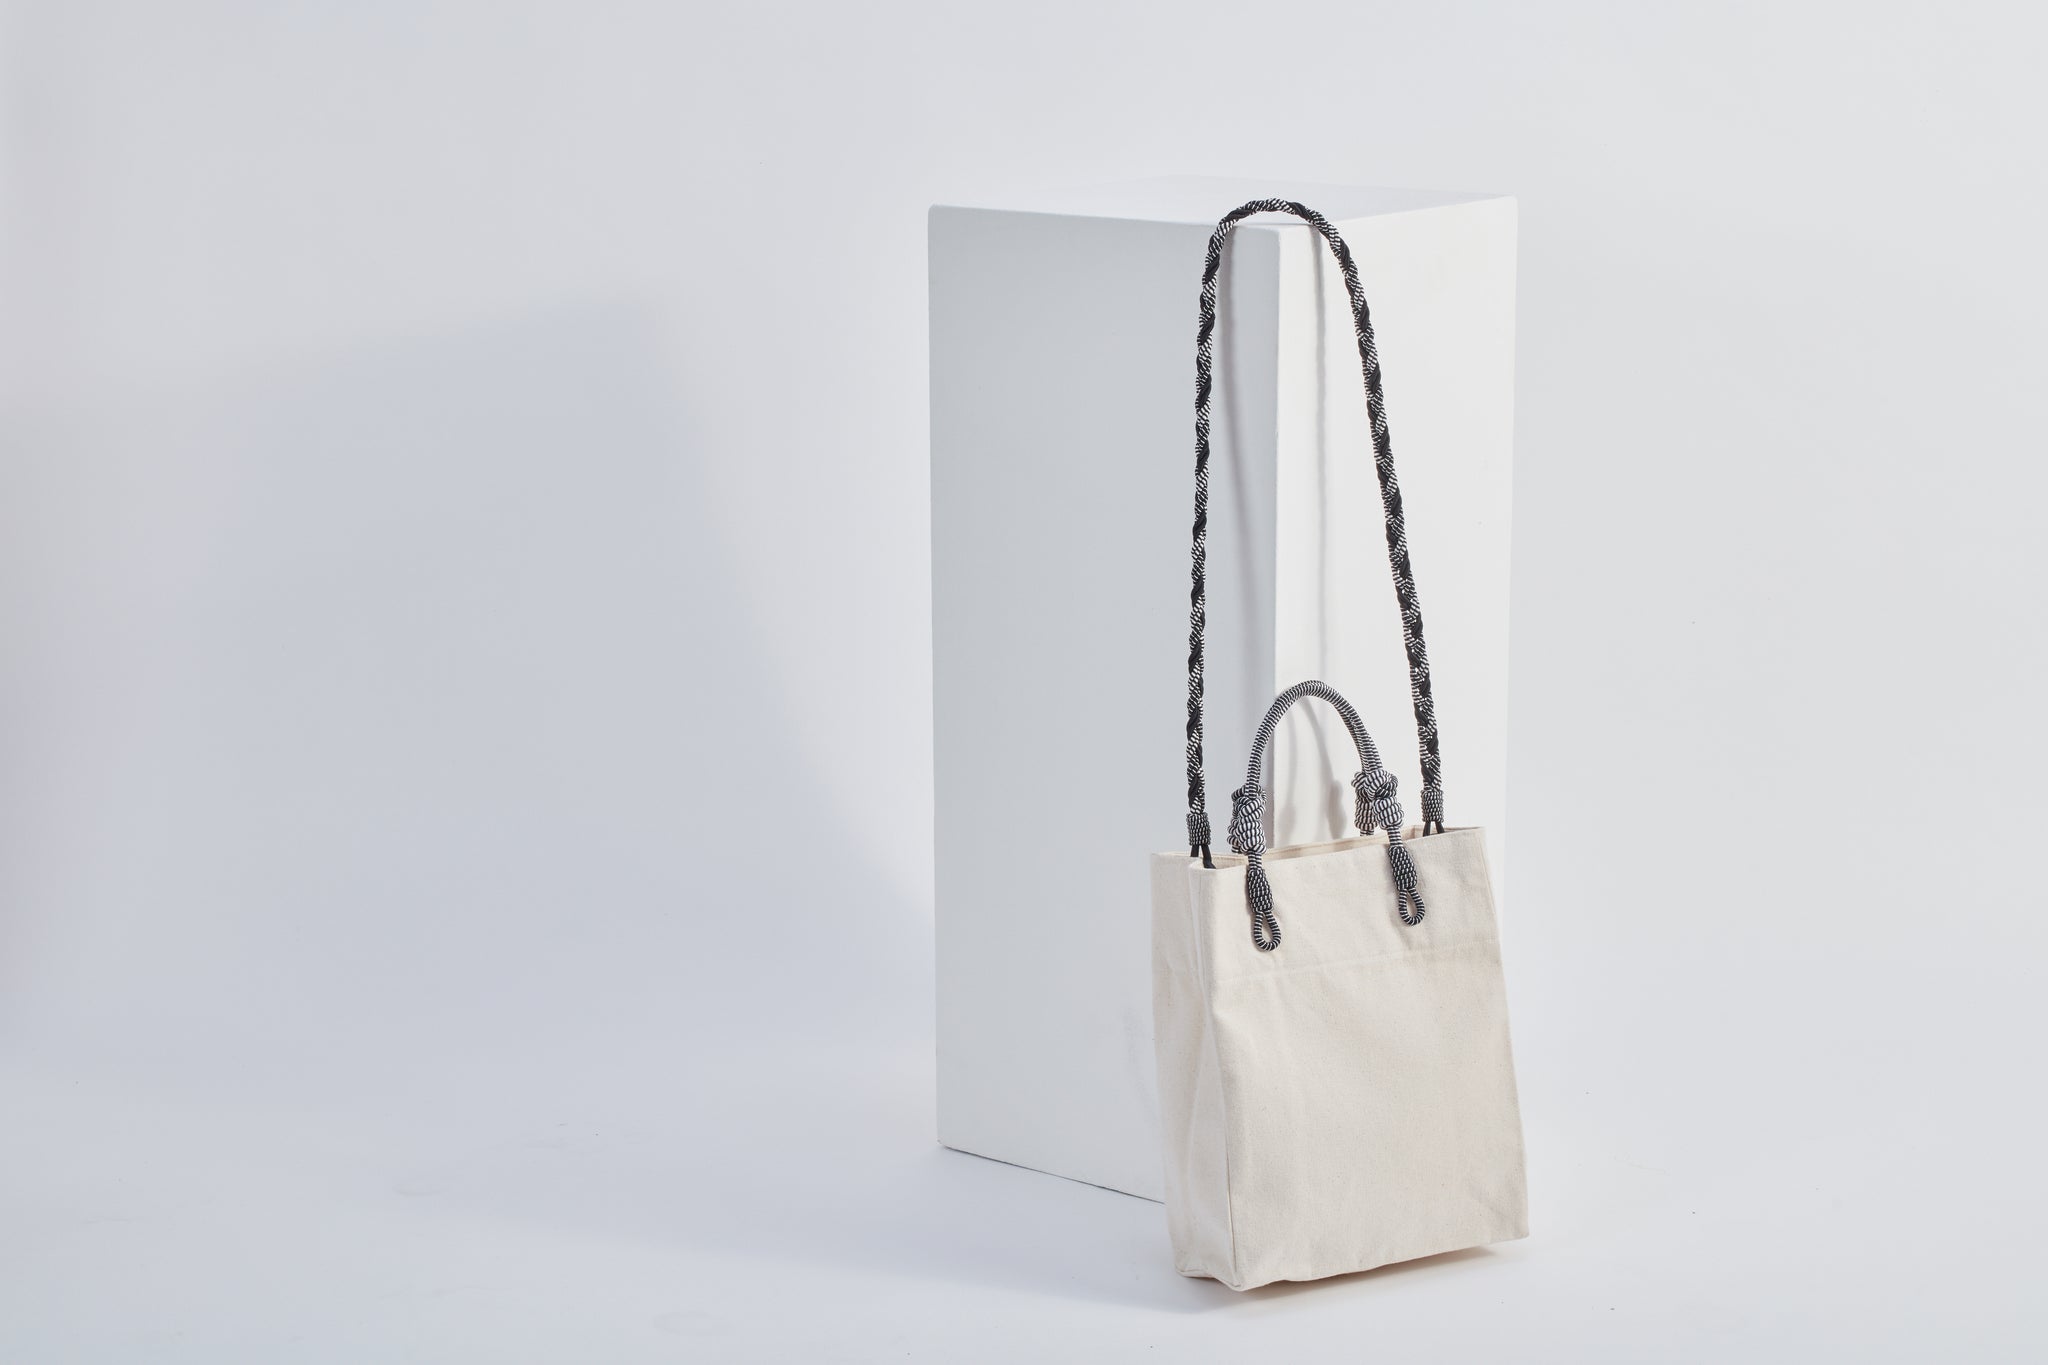 Medium bag with braided strap